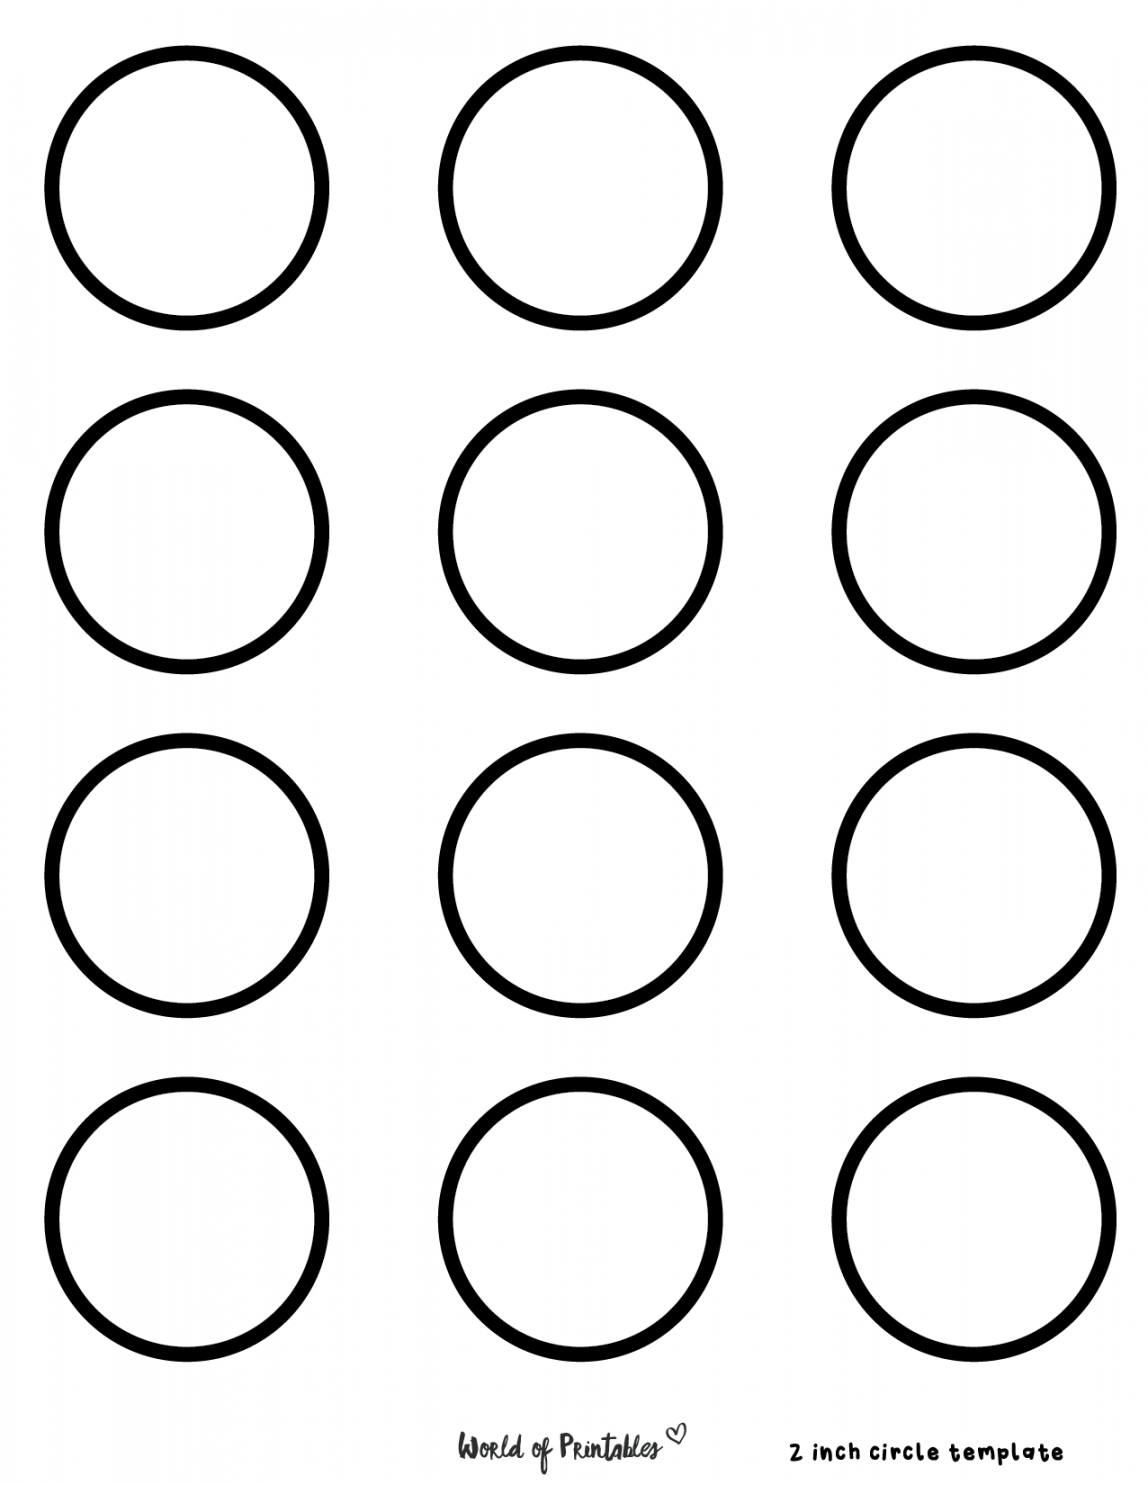 Free Printable Circle Templates - Various Sizes - World of Printables - FREE Printables - Circles Template